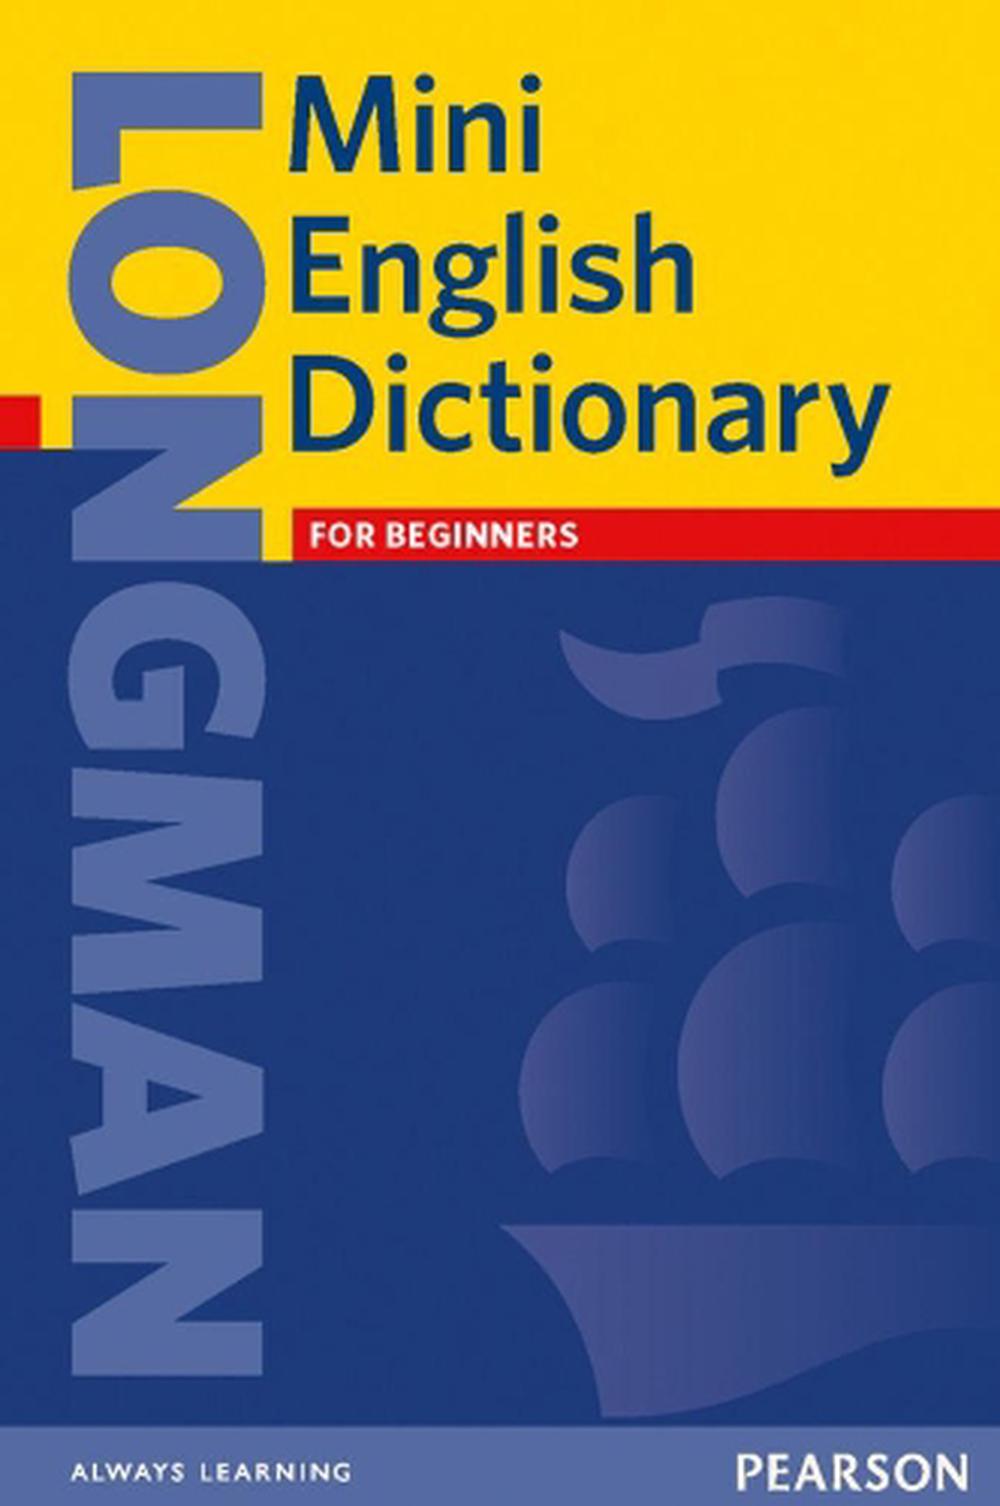 longman dictionary free